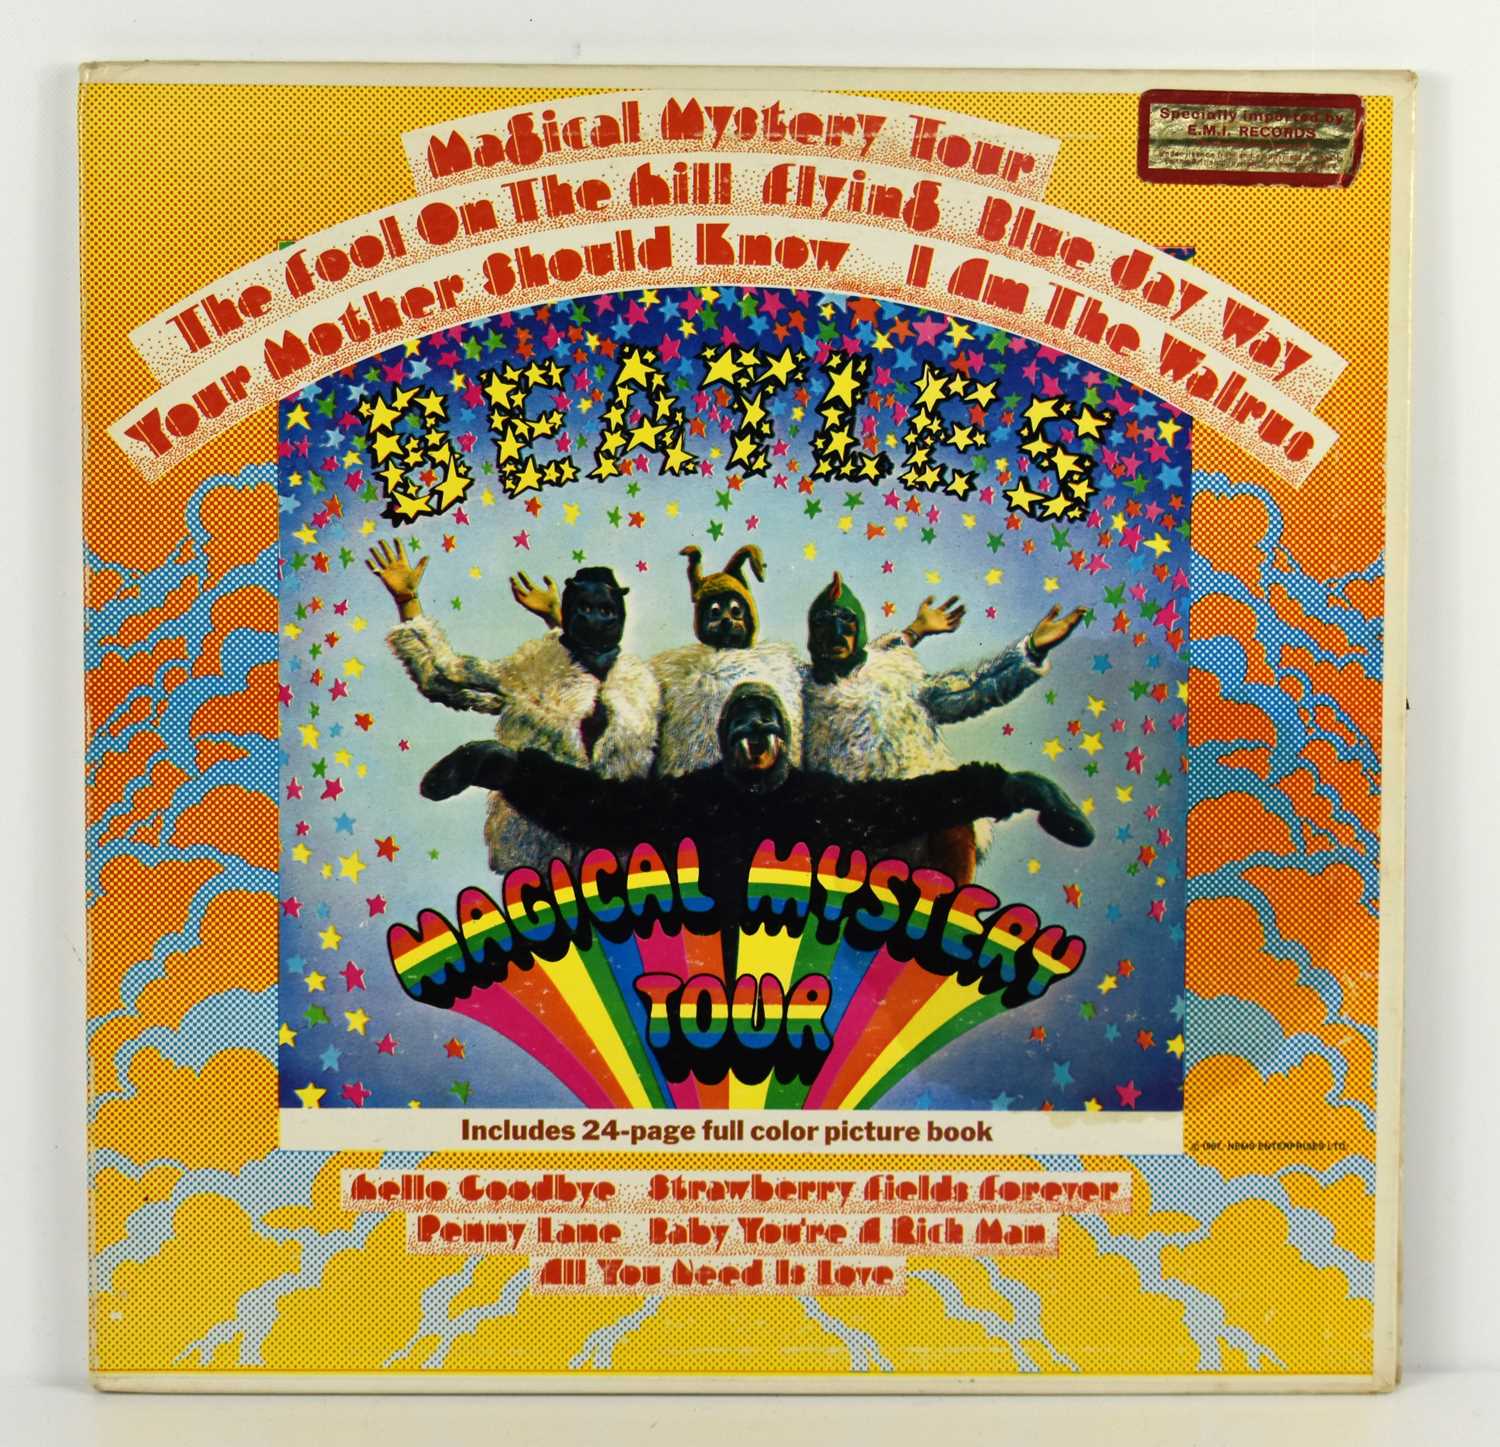 Lot 25 - The Beatles "Magical Mystery Tour" vinyl...